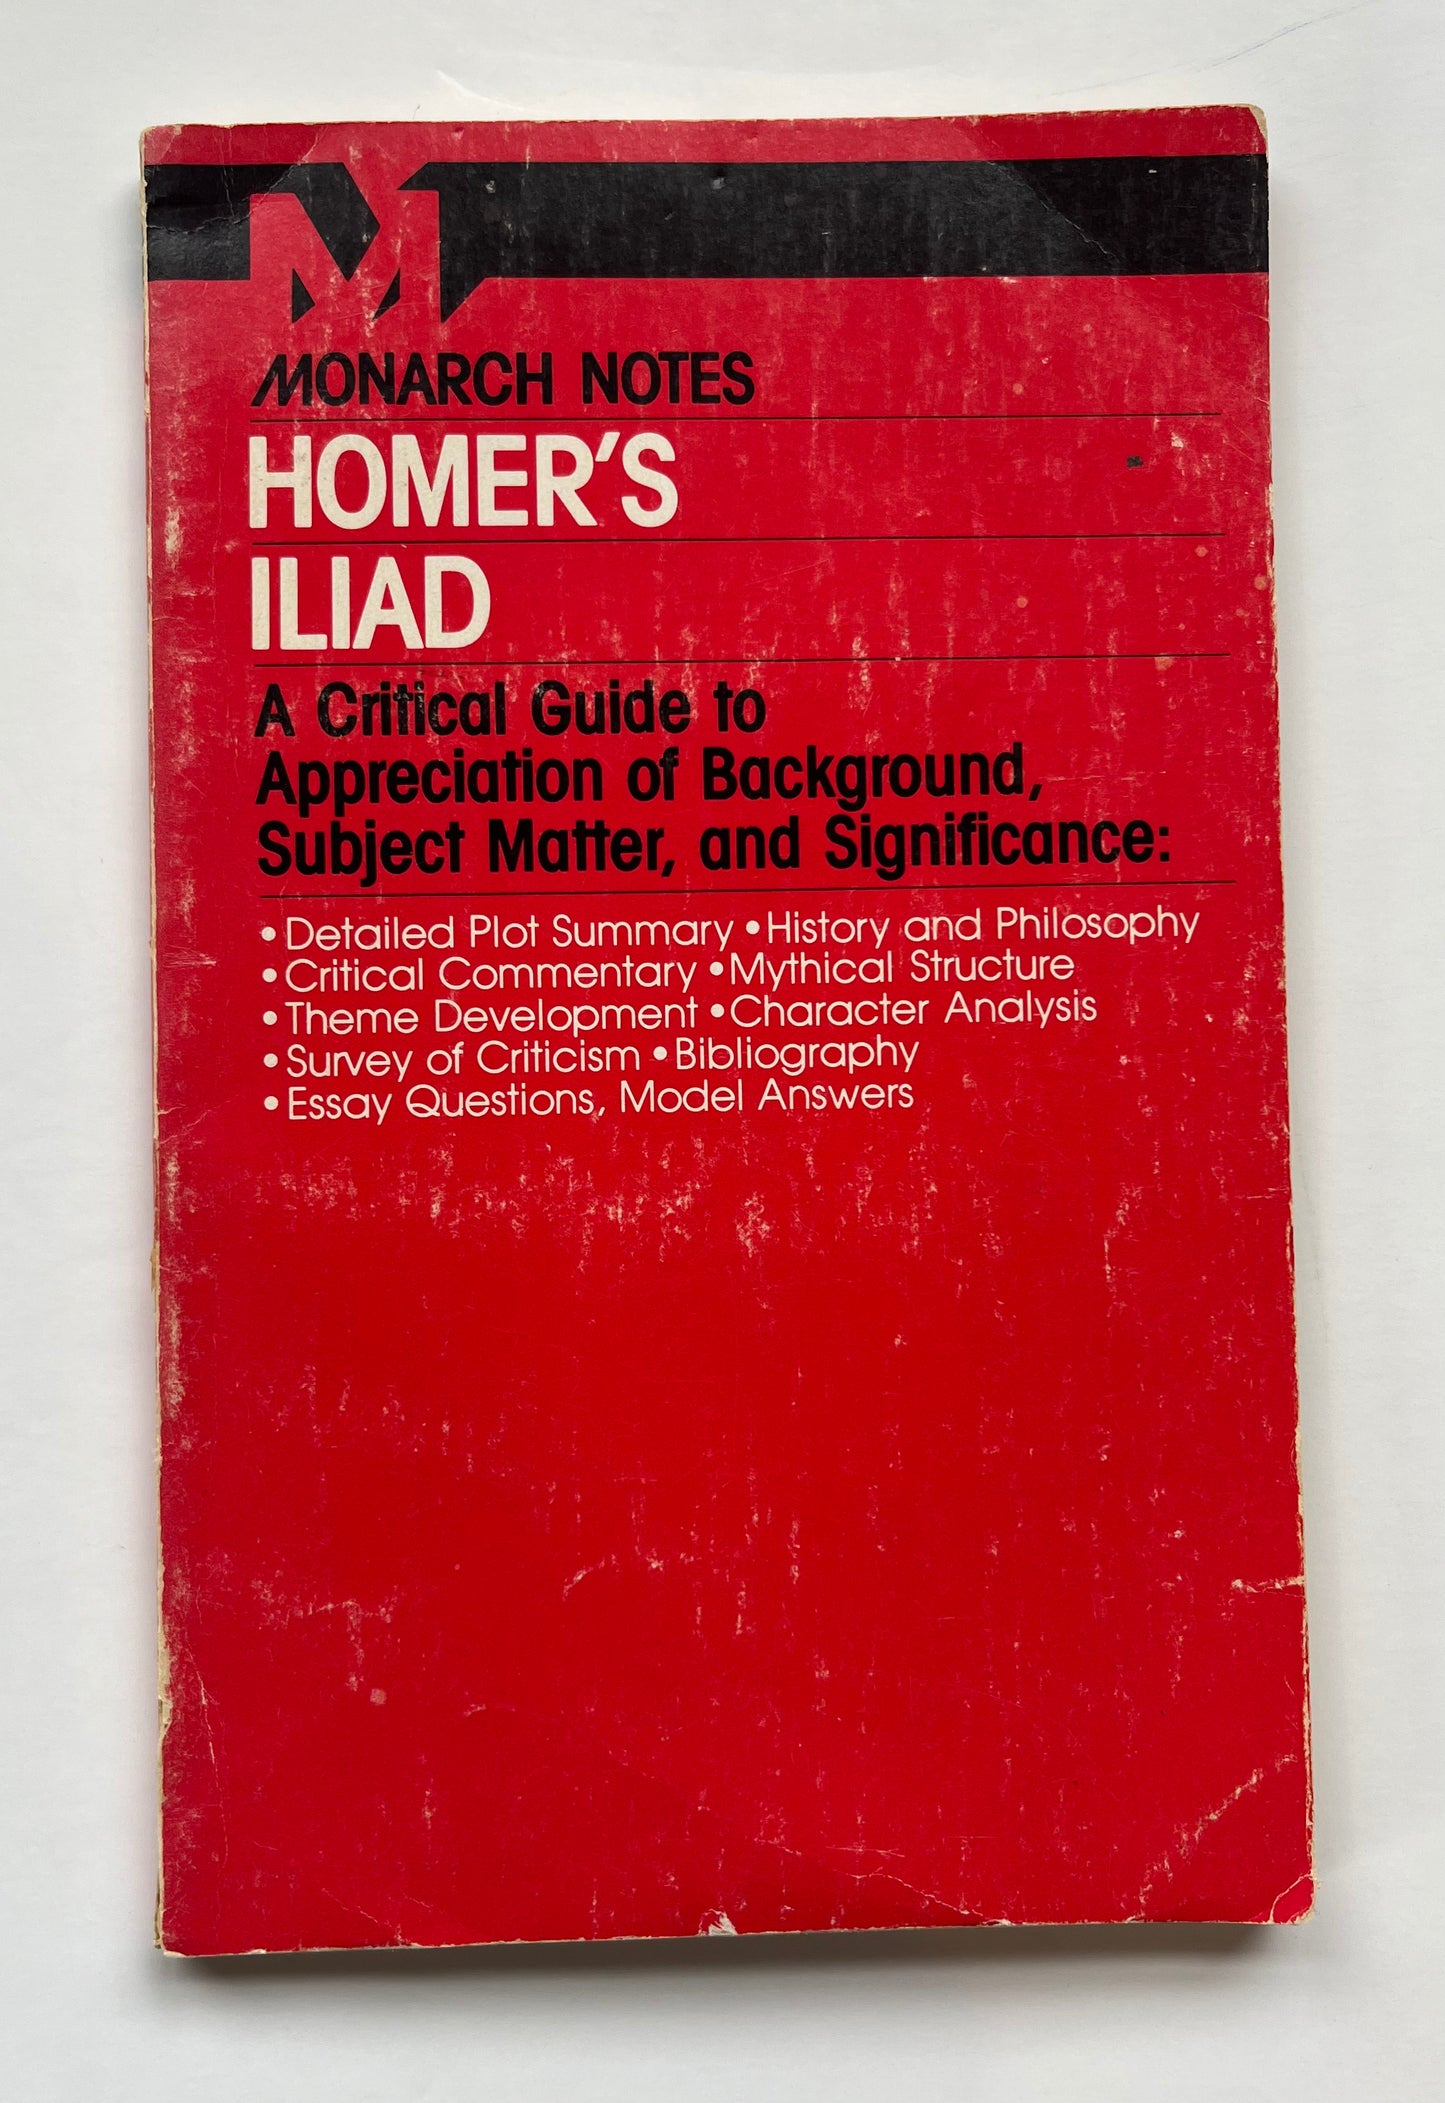 Monarch Notes: Homers Iliad